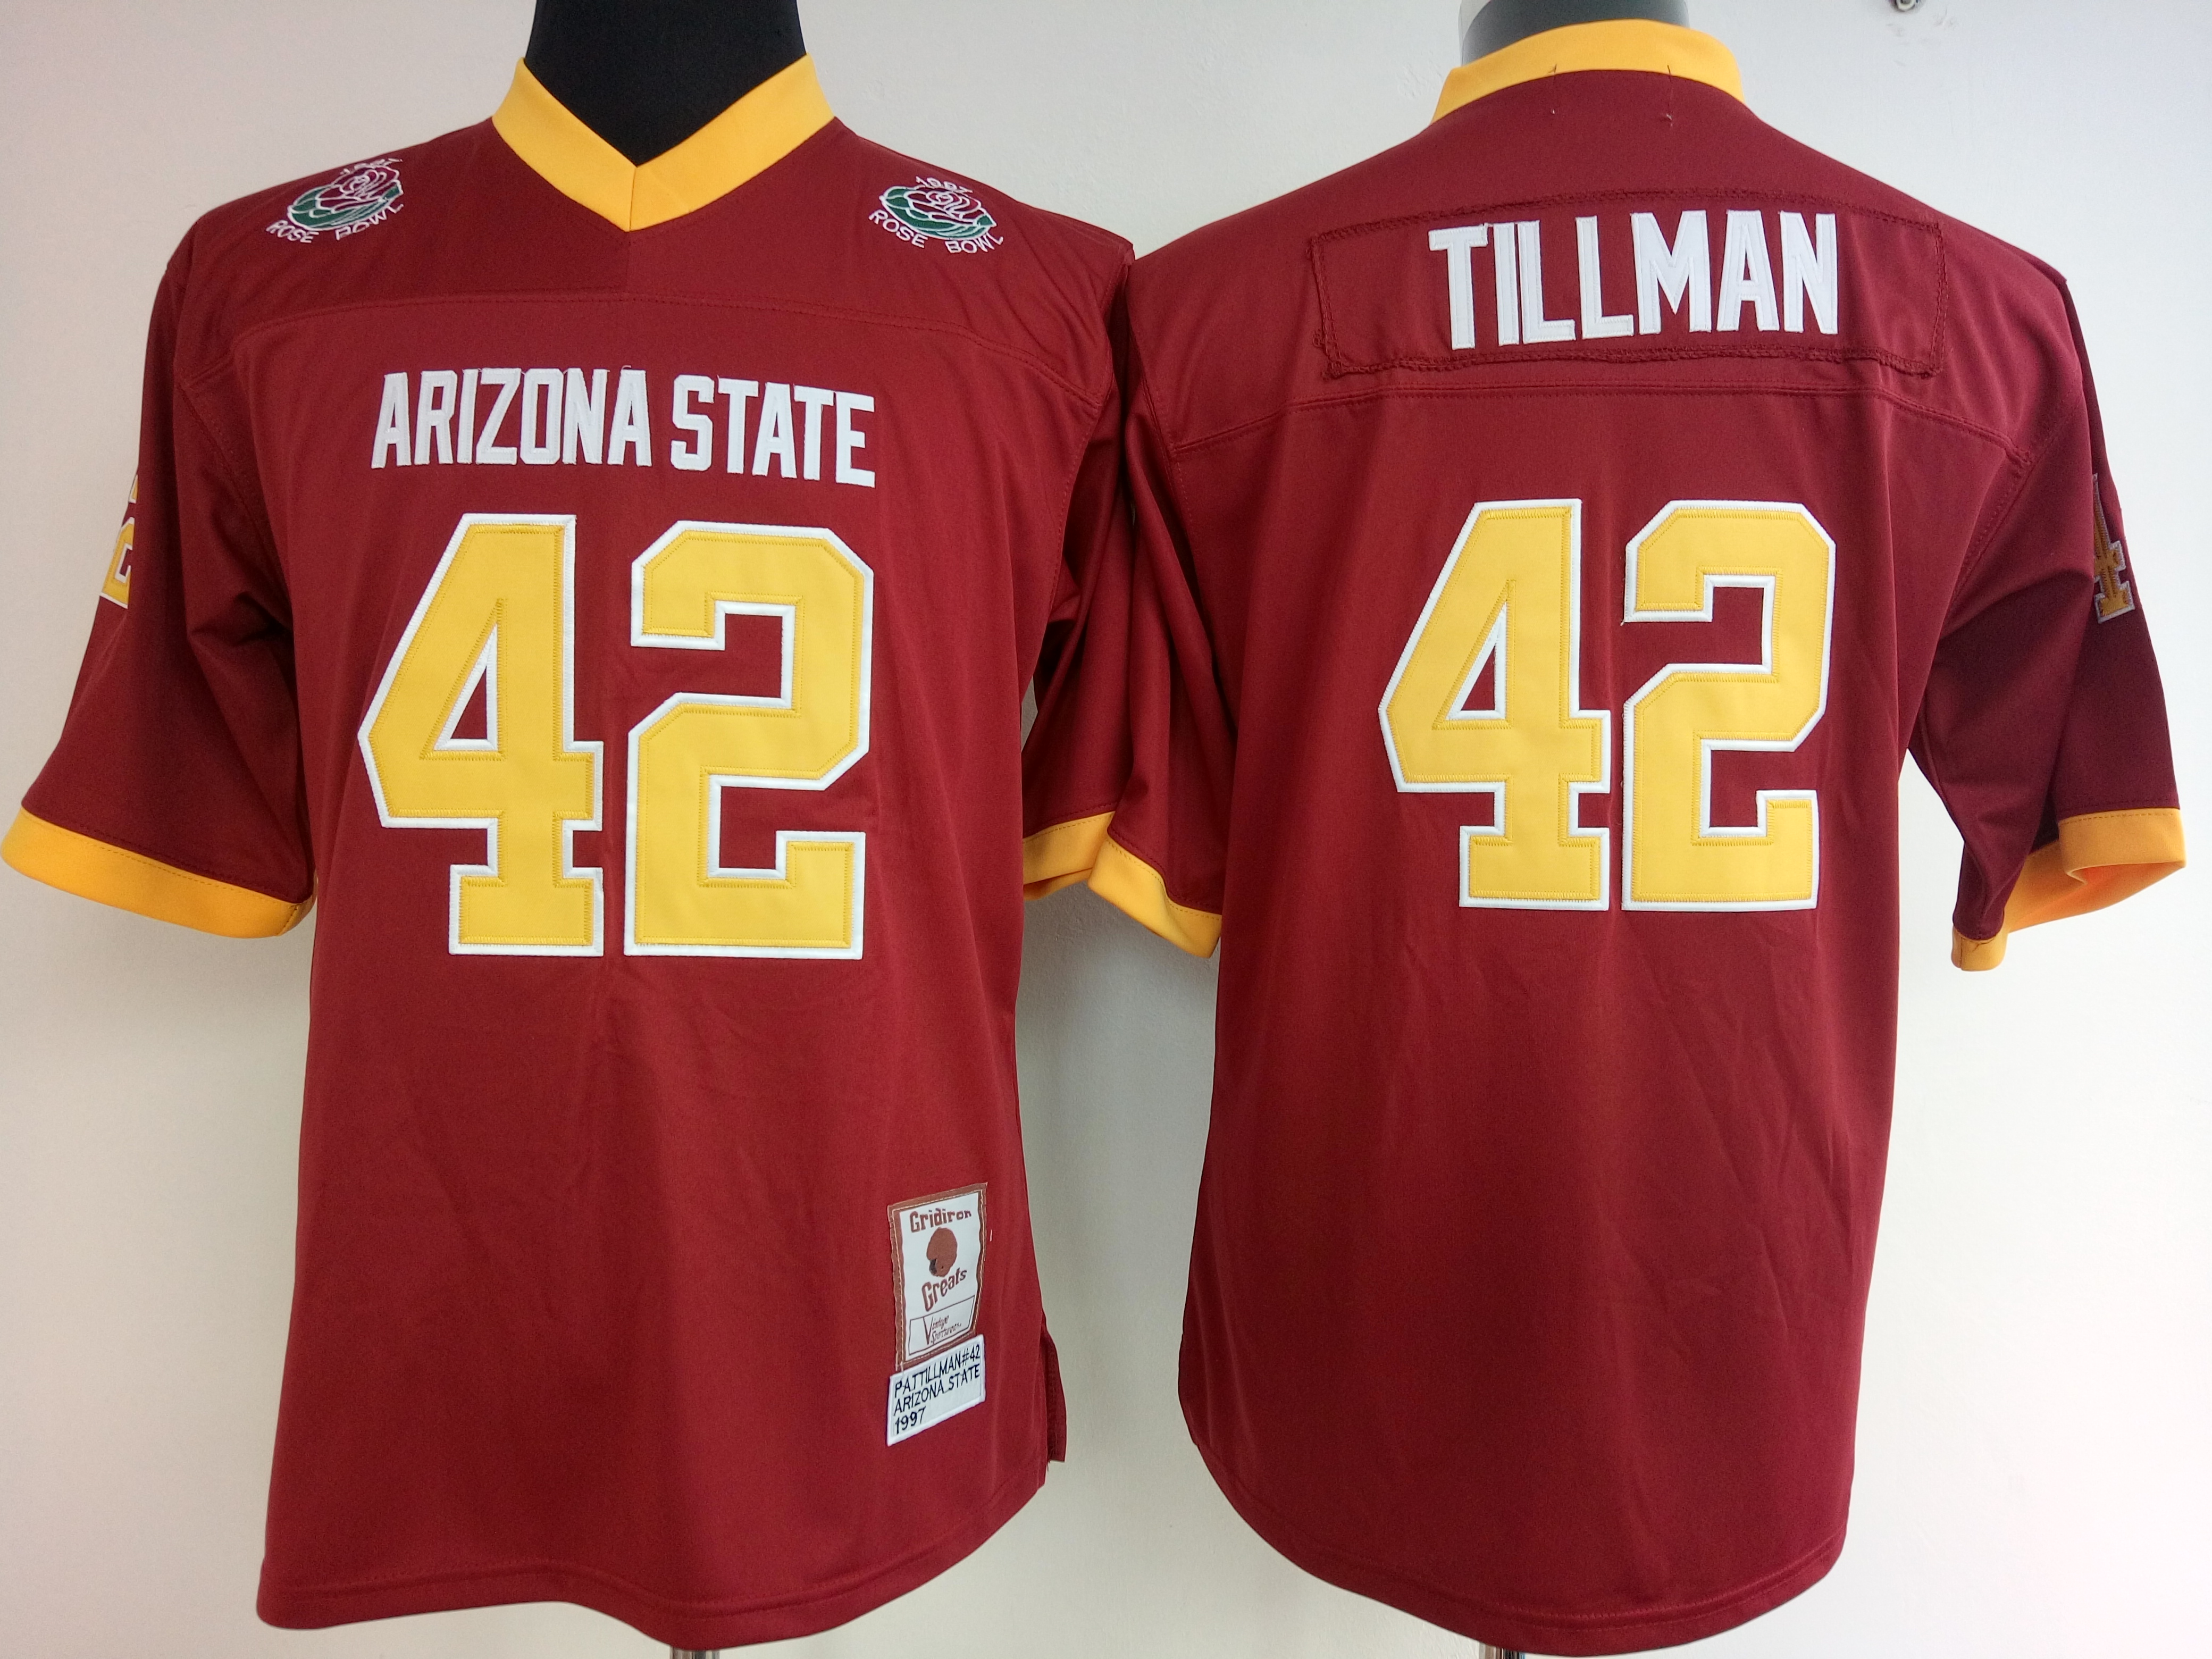 NCAA Womens Arizona State Sun Devils RED #42 Tillman jerseys